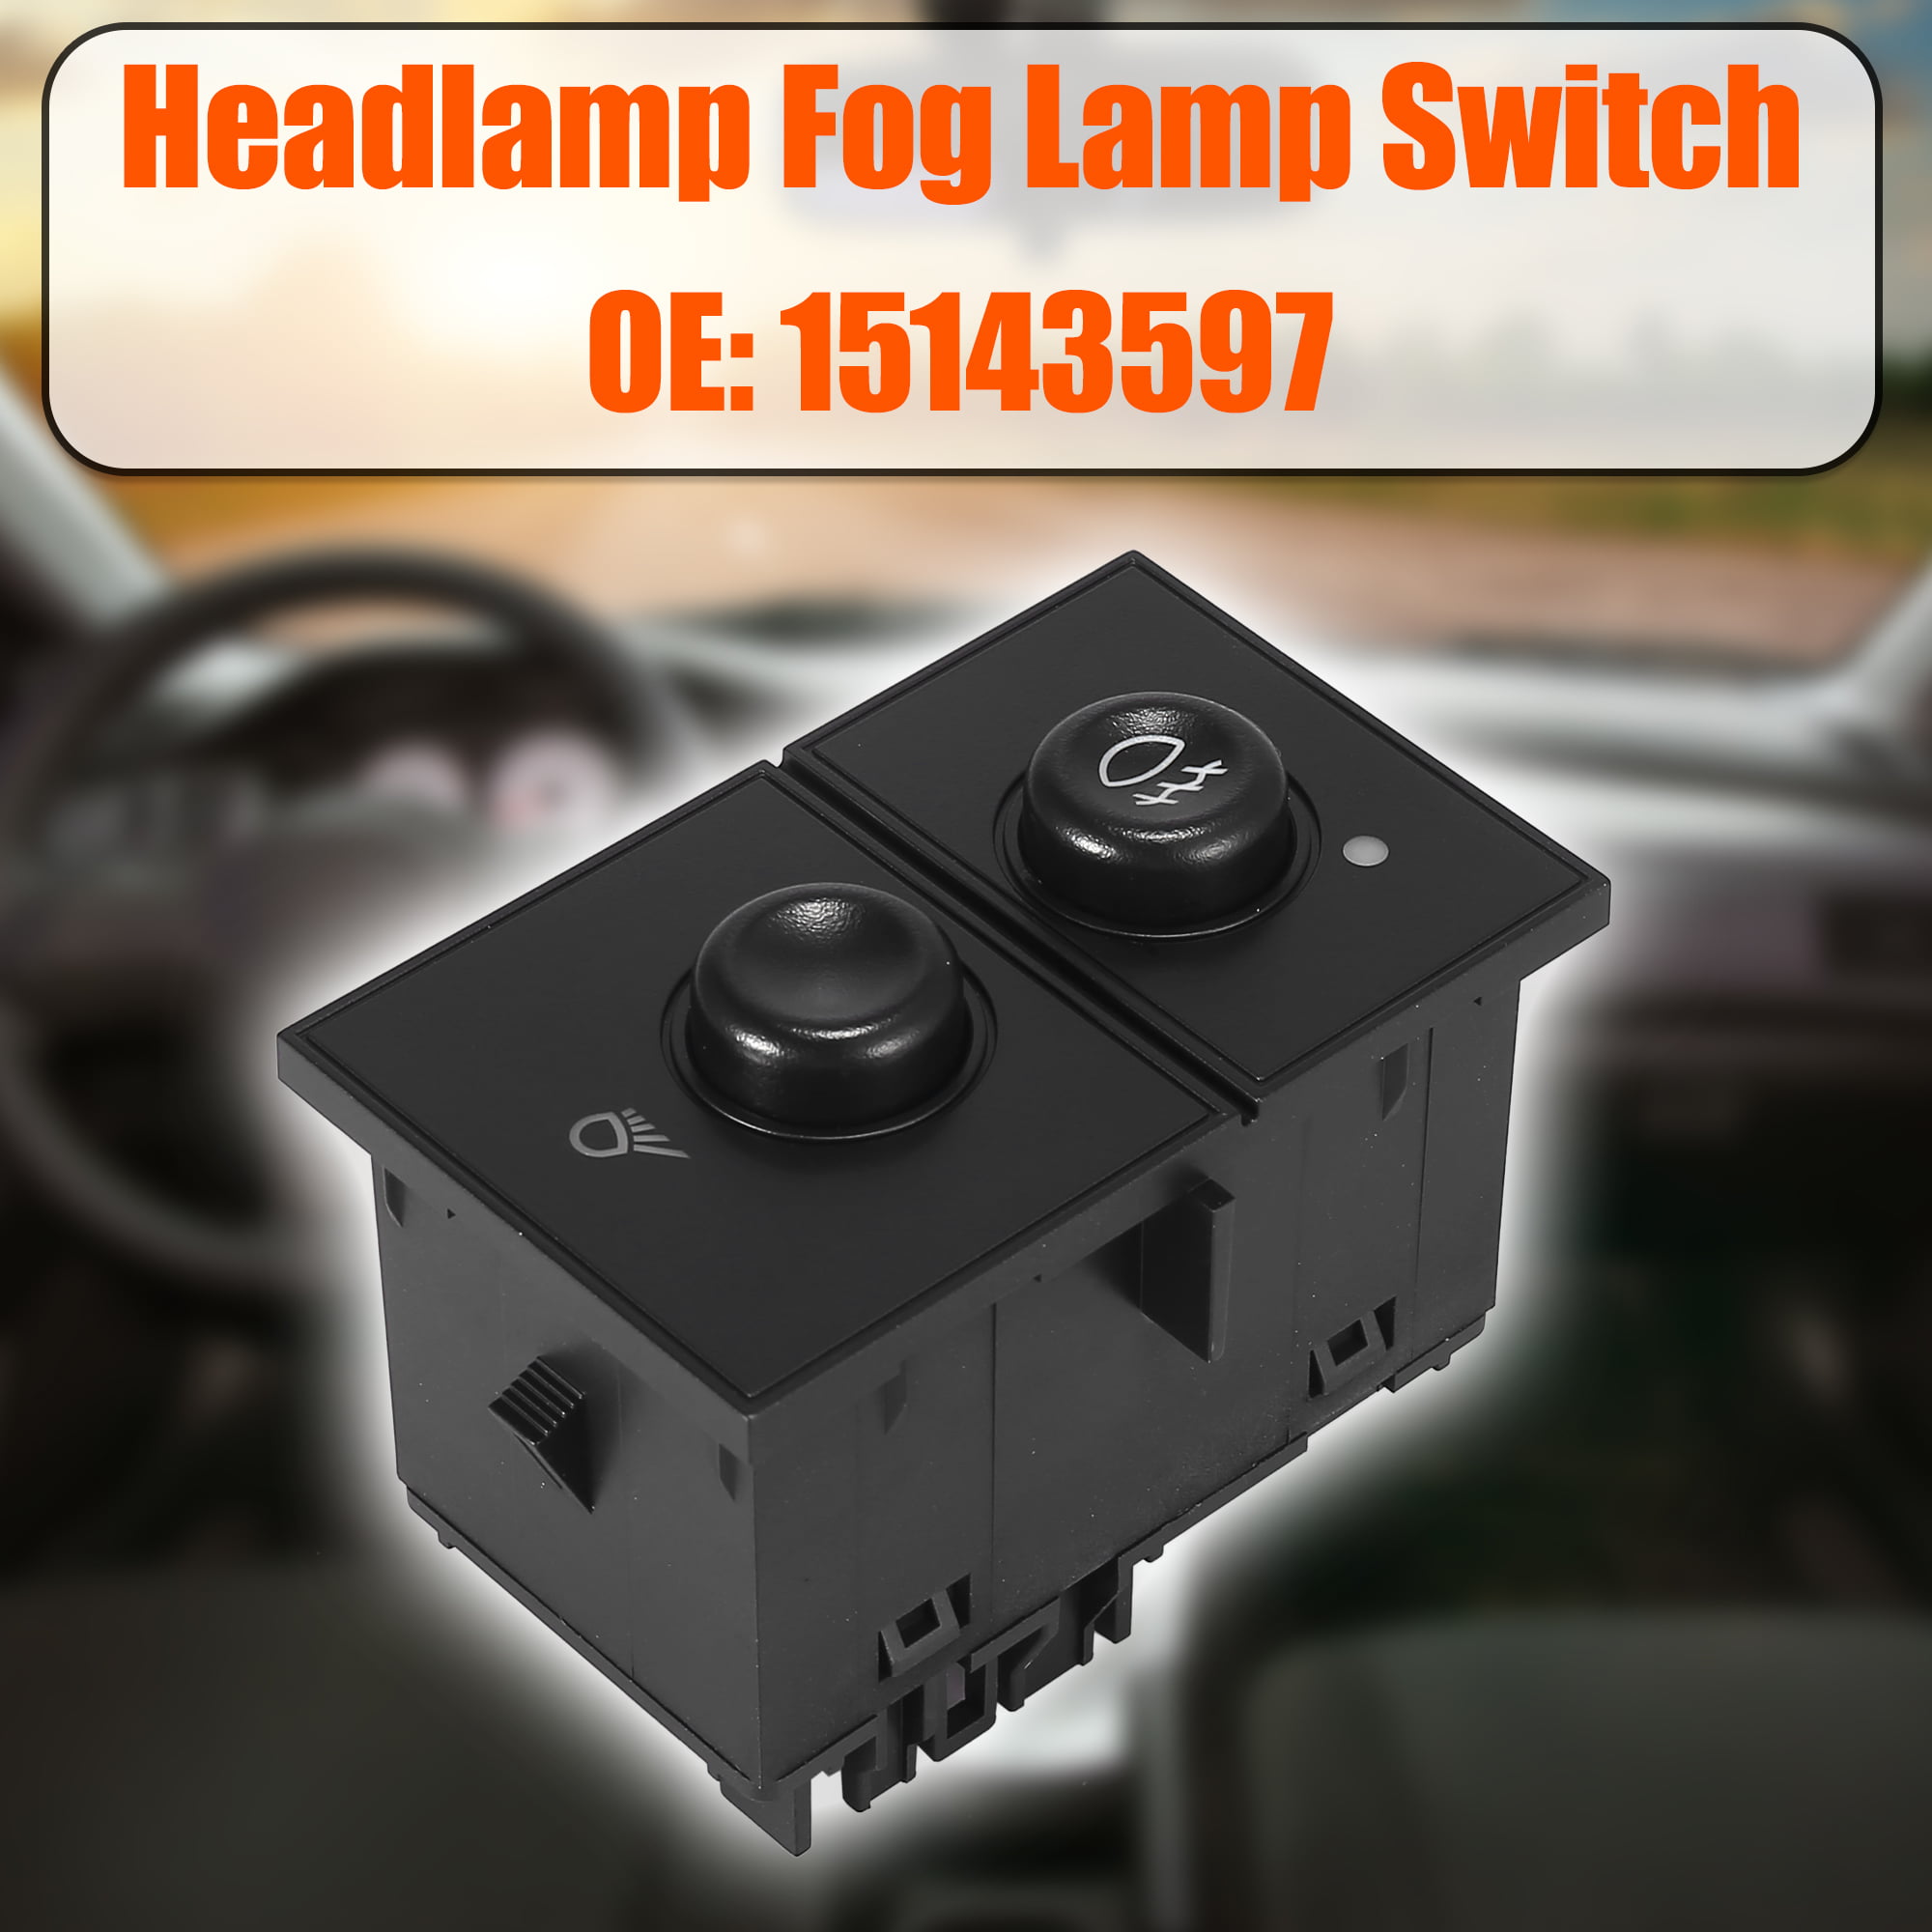 X AUTOHAUX Car Headlight Switch Headlamp Fog Lamp Switch Control 15143597 for Chevrolet Silverado 1500 2500 HD